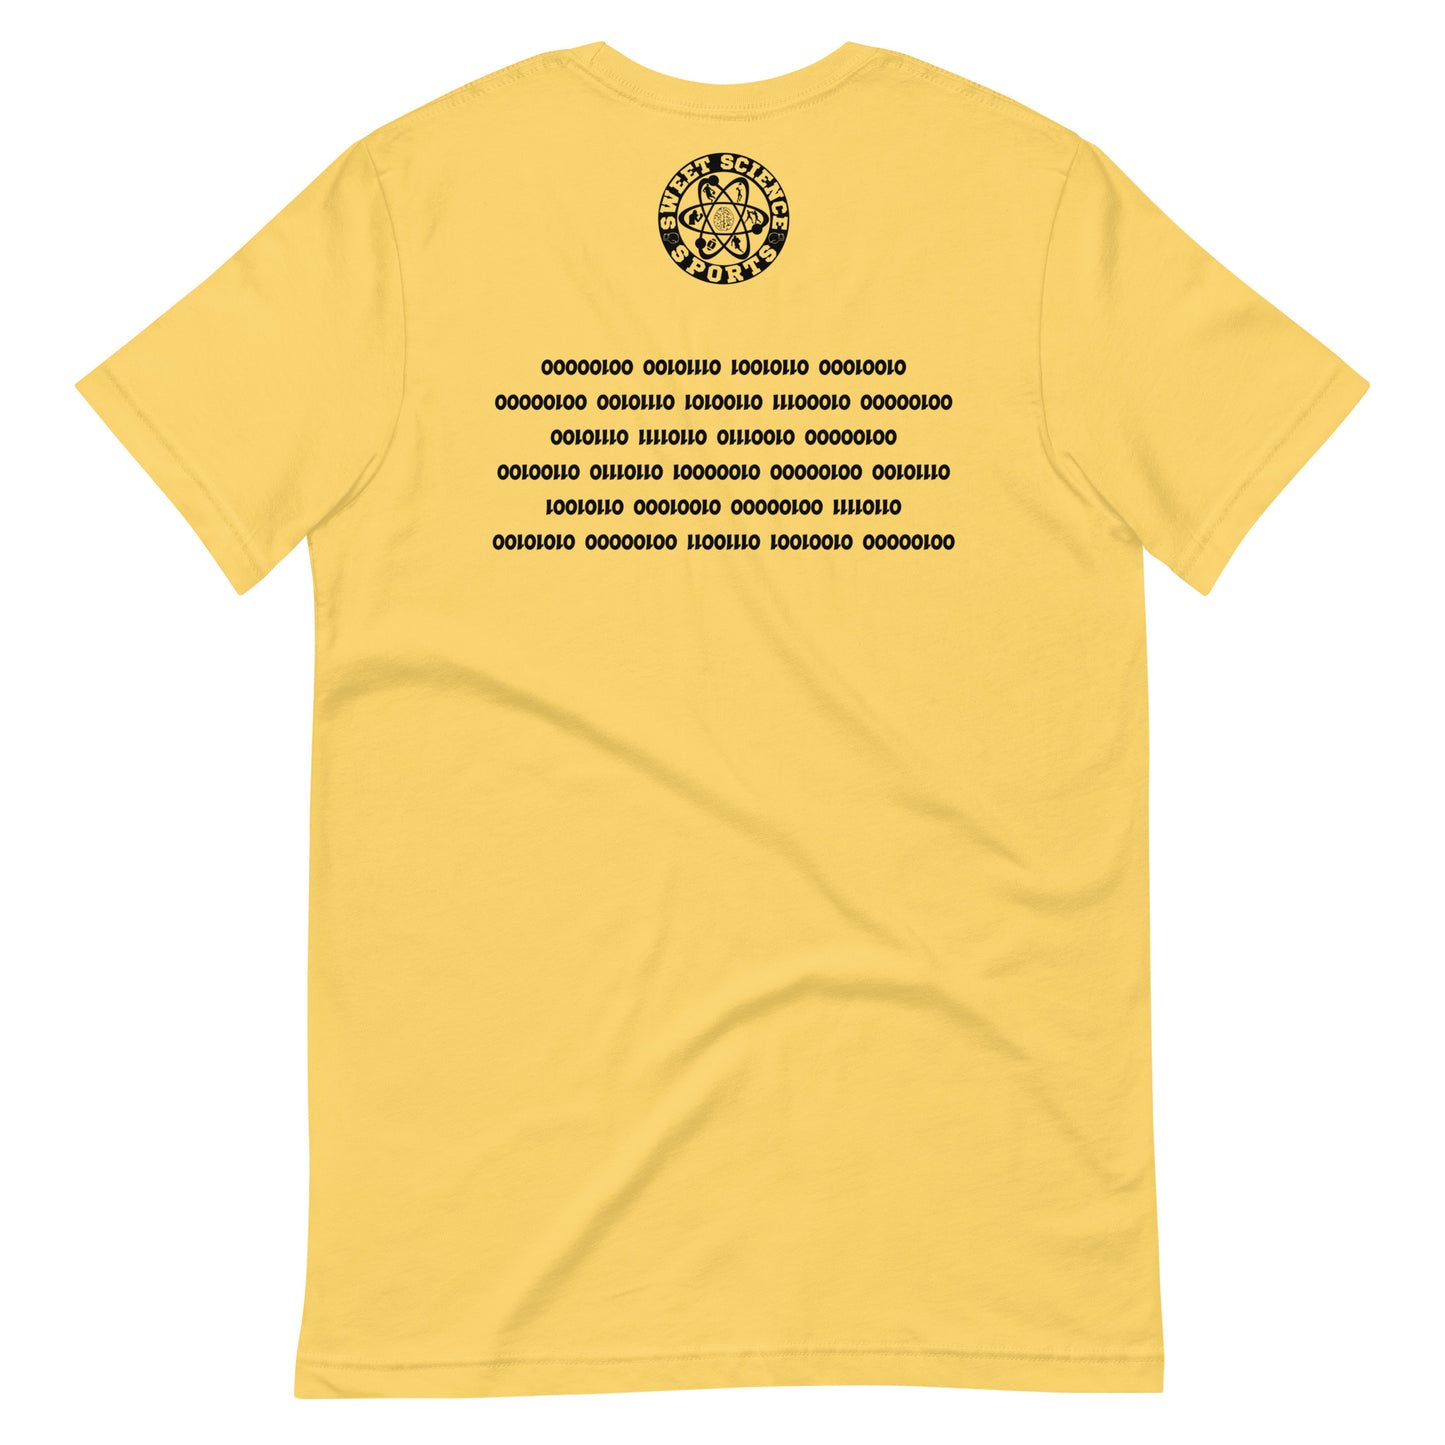 Sweet Science Sports The Fundamentals ( Boxing Binary ) t-shirt